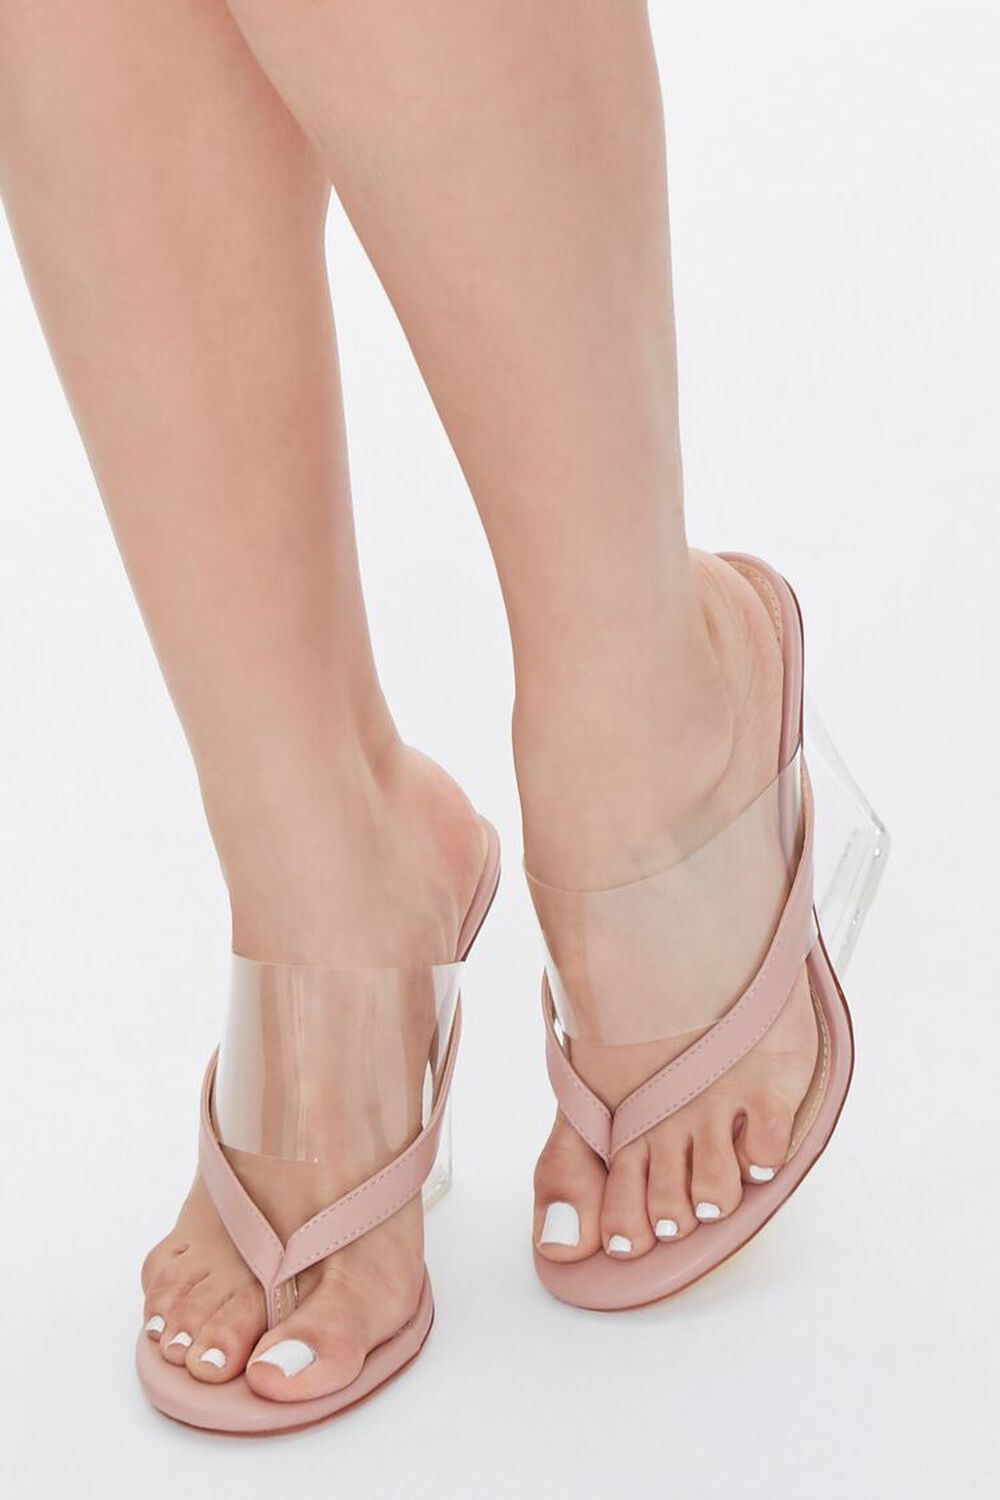 NUDE Toe-Thong Lucite Wedge Heels, image 1